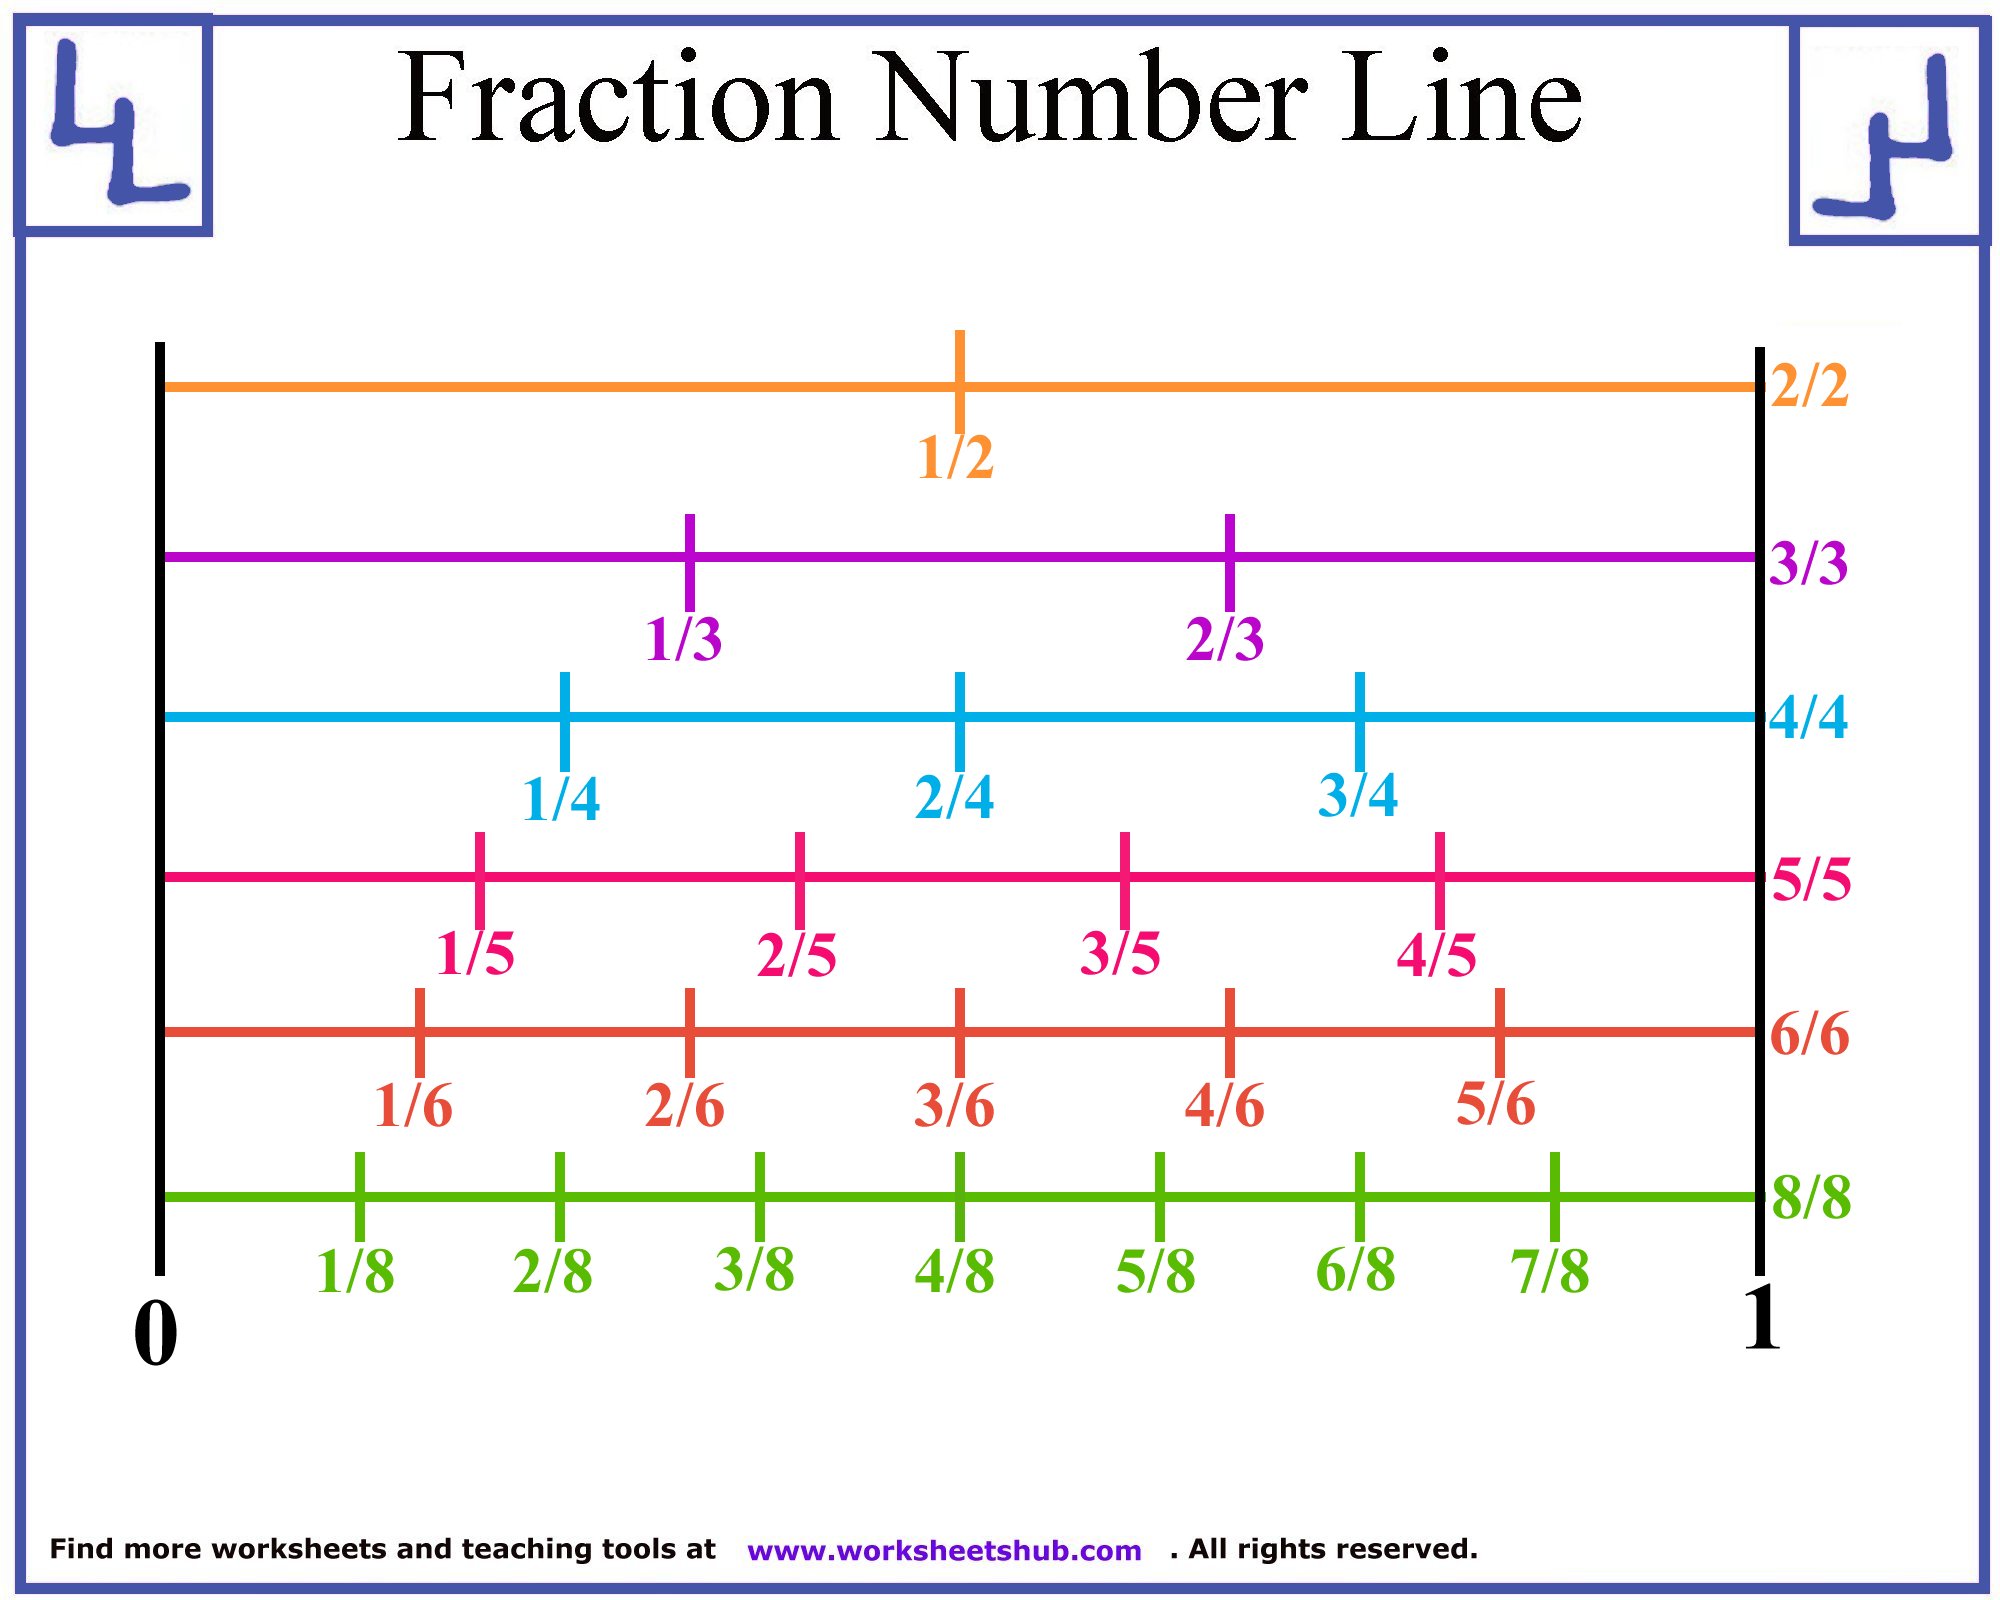 equivalent-fraction-number-line-printable